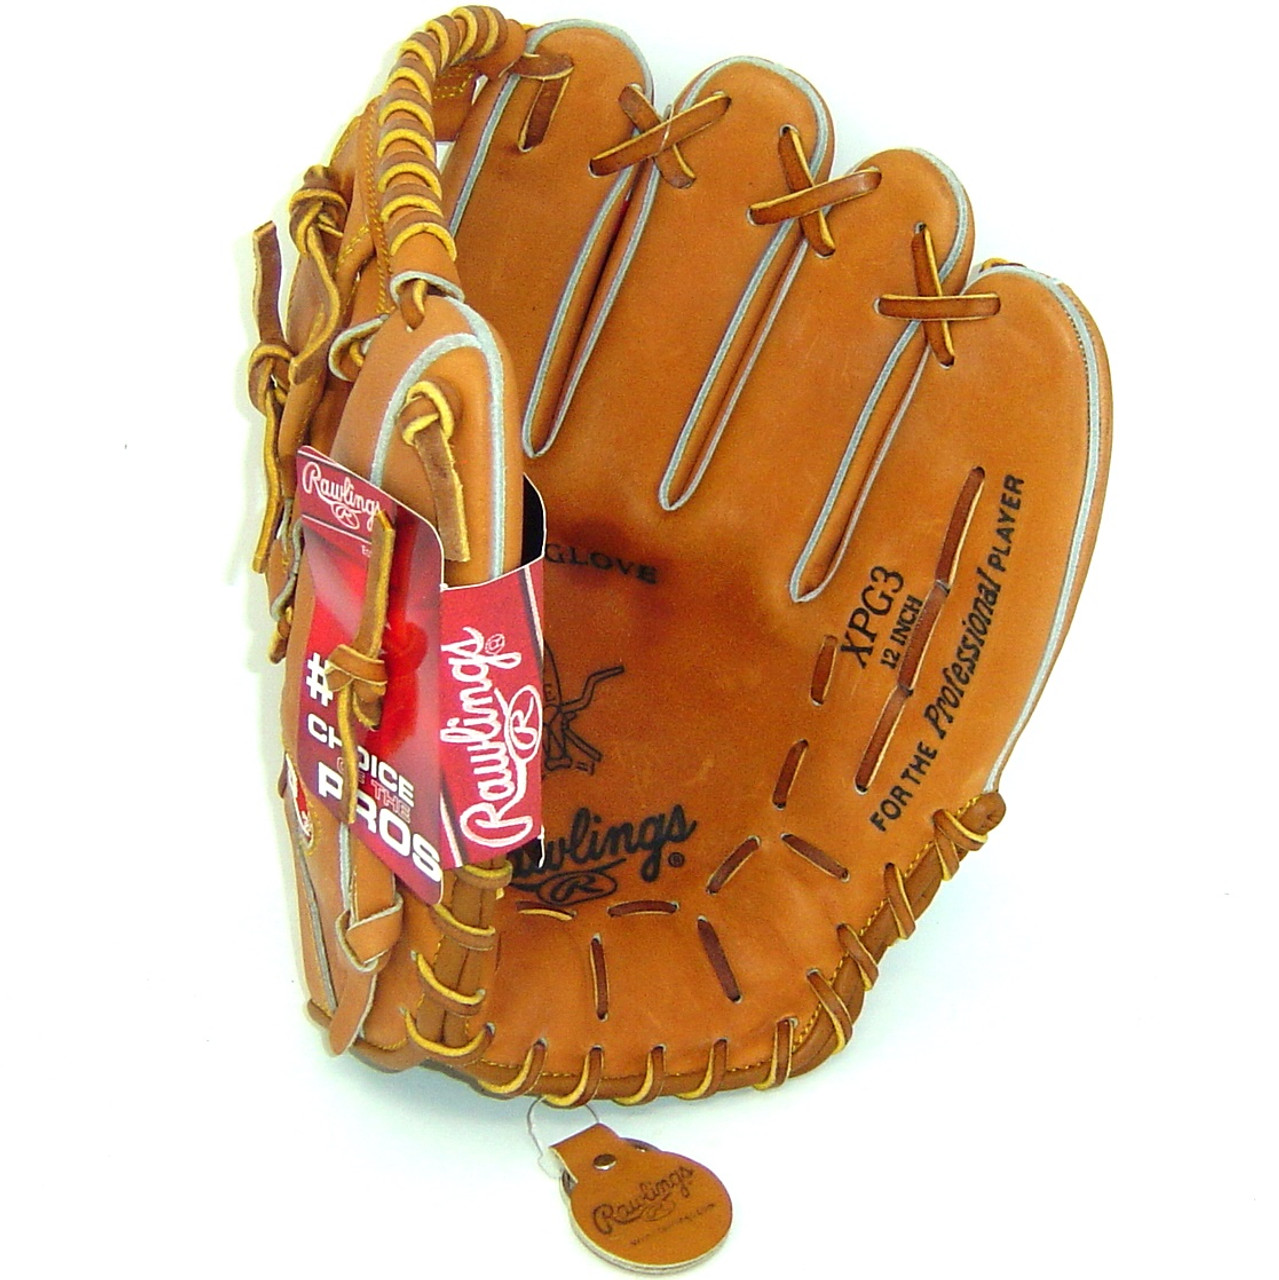 Rawlings Heart of Hide XPG3 Baseball Glove 12 inch Right Hand Throw